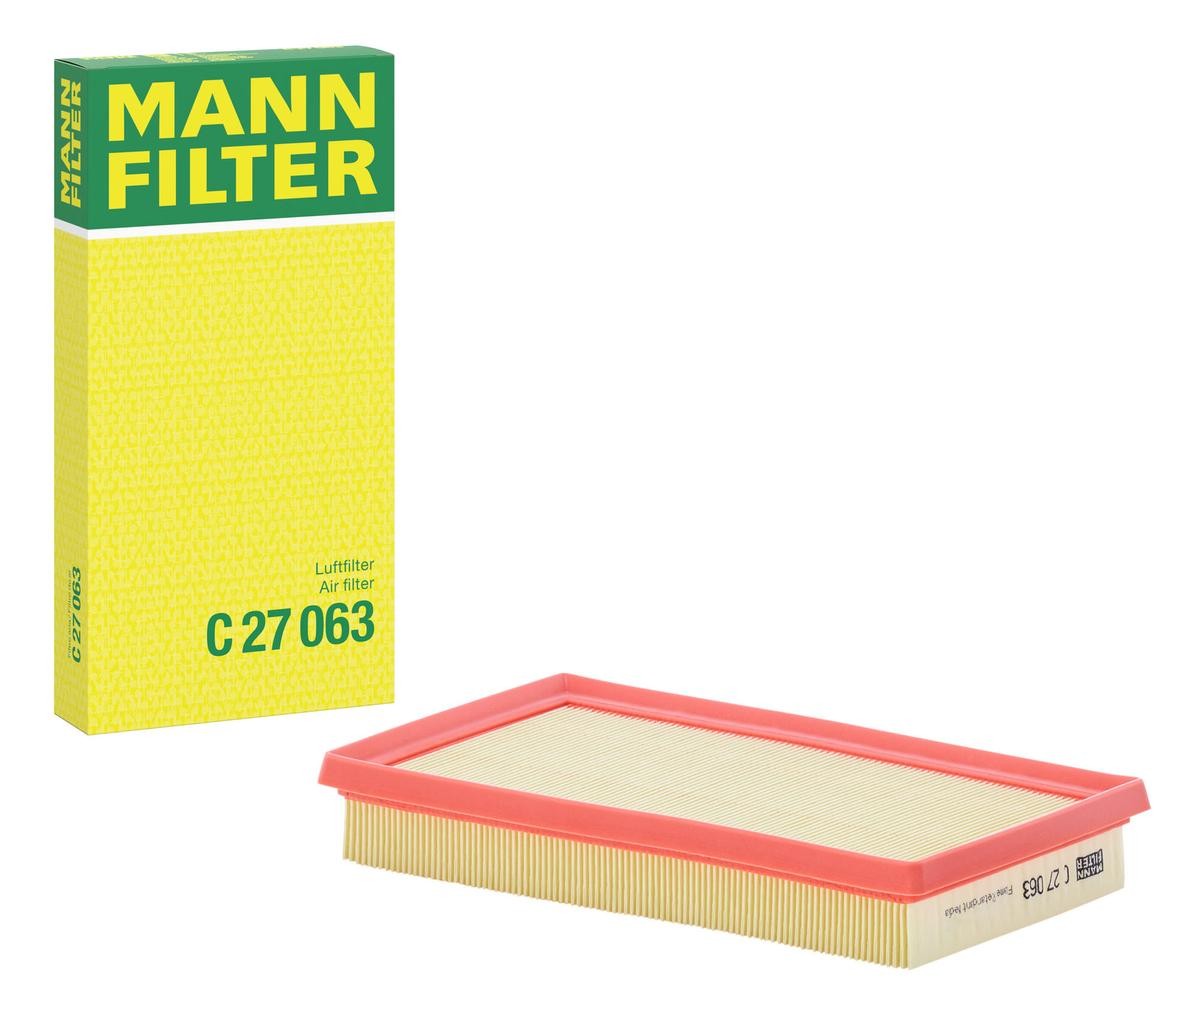 C 27 063 MANN-FILTER Air filters DAIHATSU 37mm, 151mm, 269mm, Filter Insert